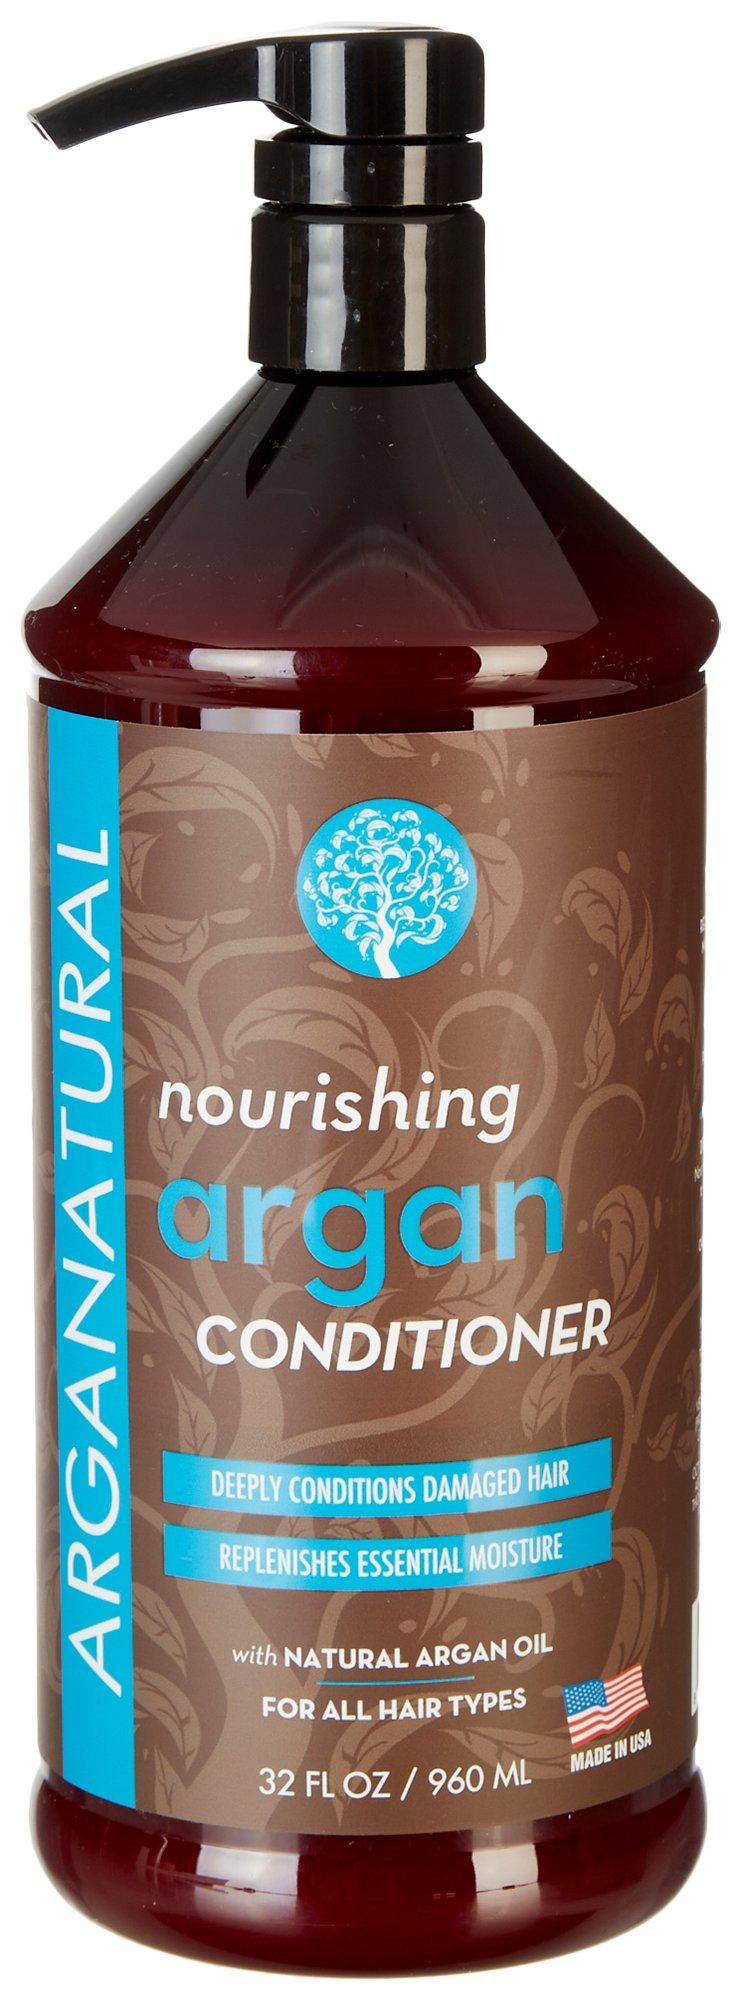 Arganatural Nourishing Argan Conditioner 32 fl. oz.